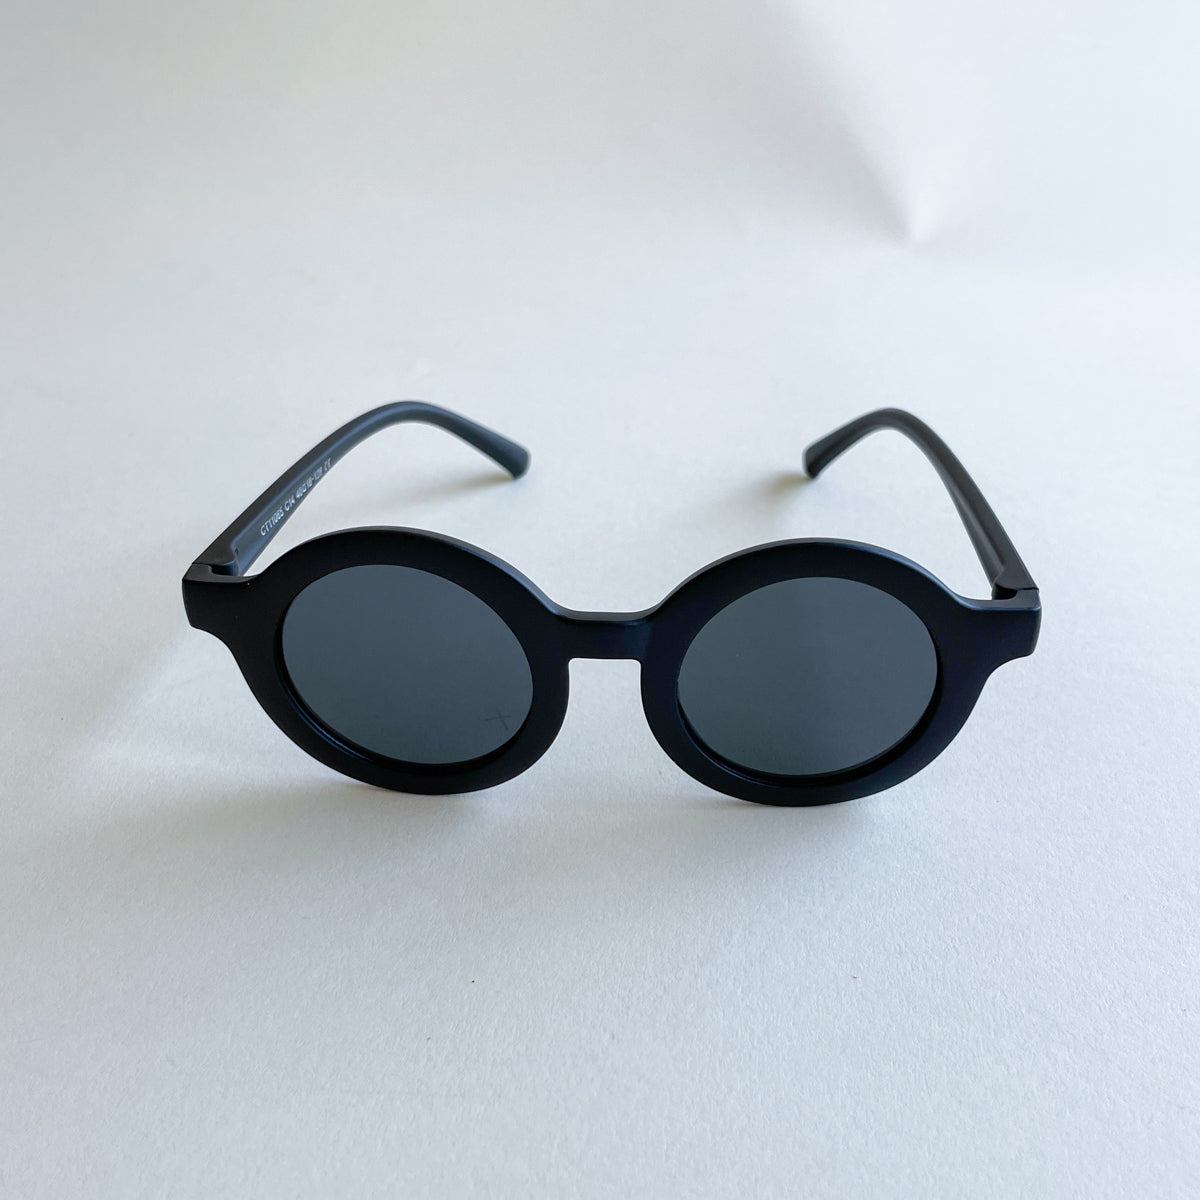 New Flexible, Resistant & Polarized UV 400 Kids Sunglasses Black